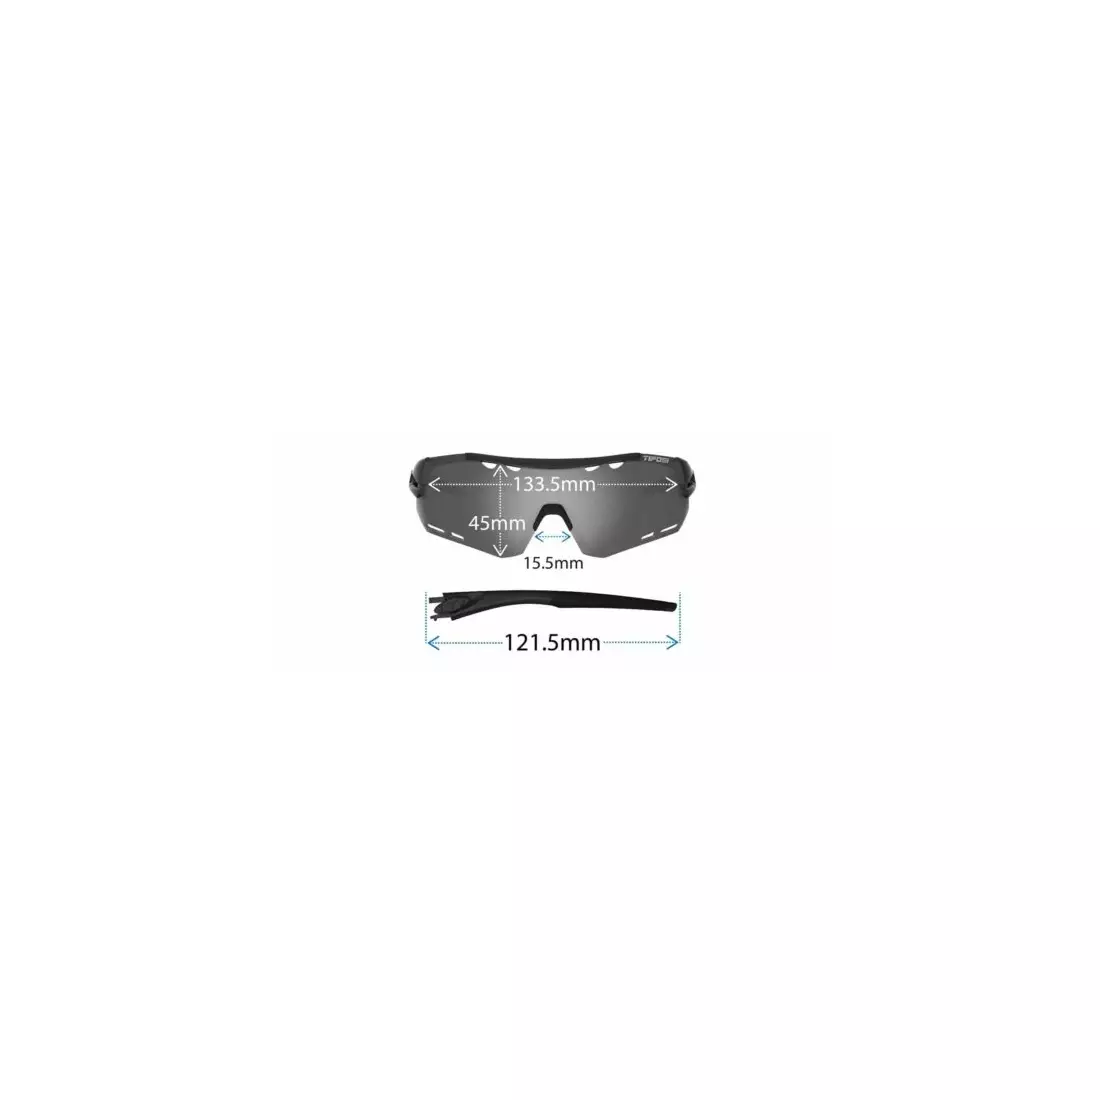 TIFOSI ochelari sport fotocromici alliant fototec gunmetal (Light Night photochrome) TFI-1490300331